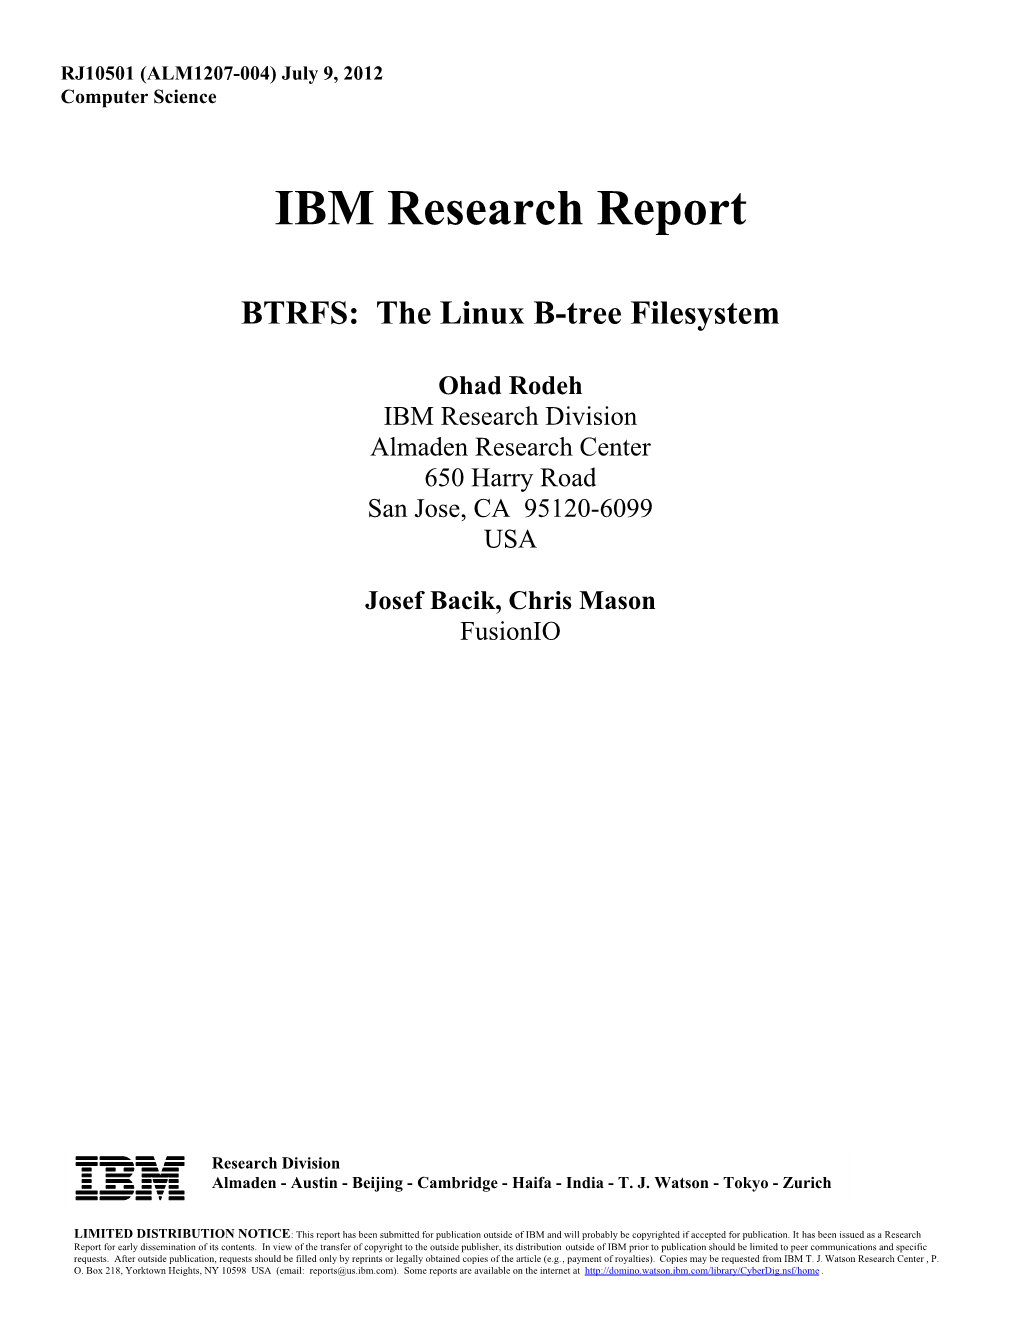 IBM Research Report